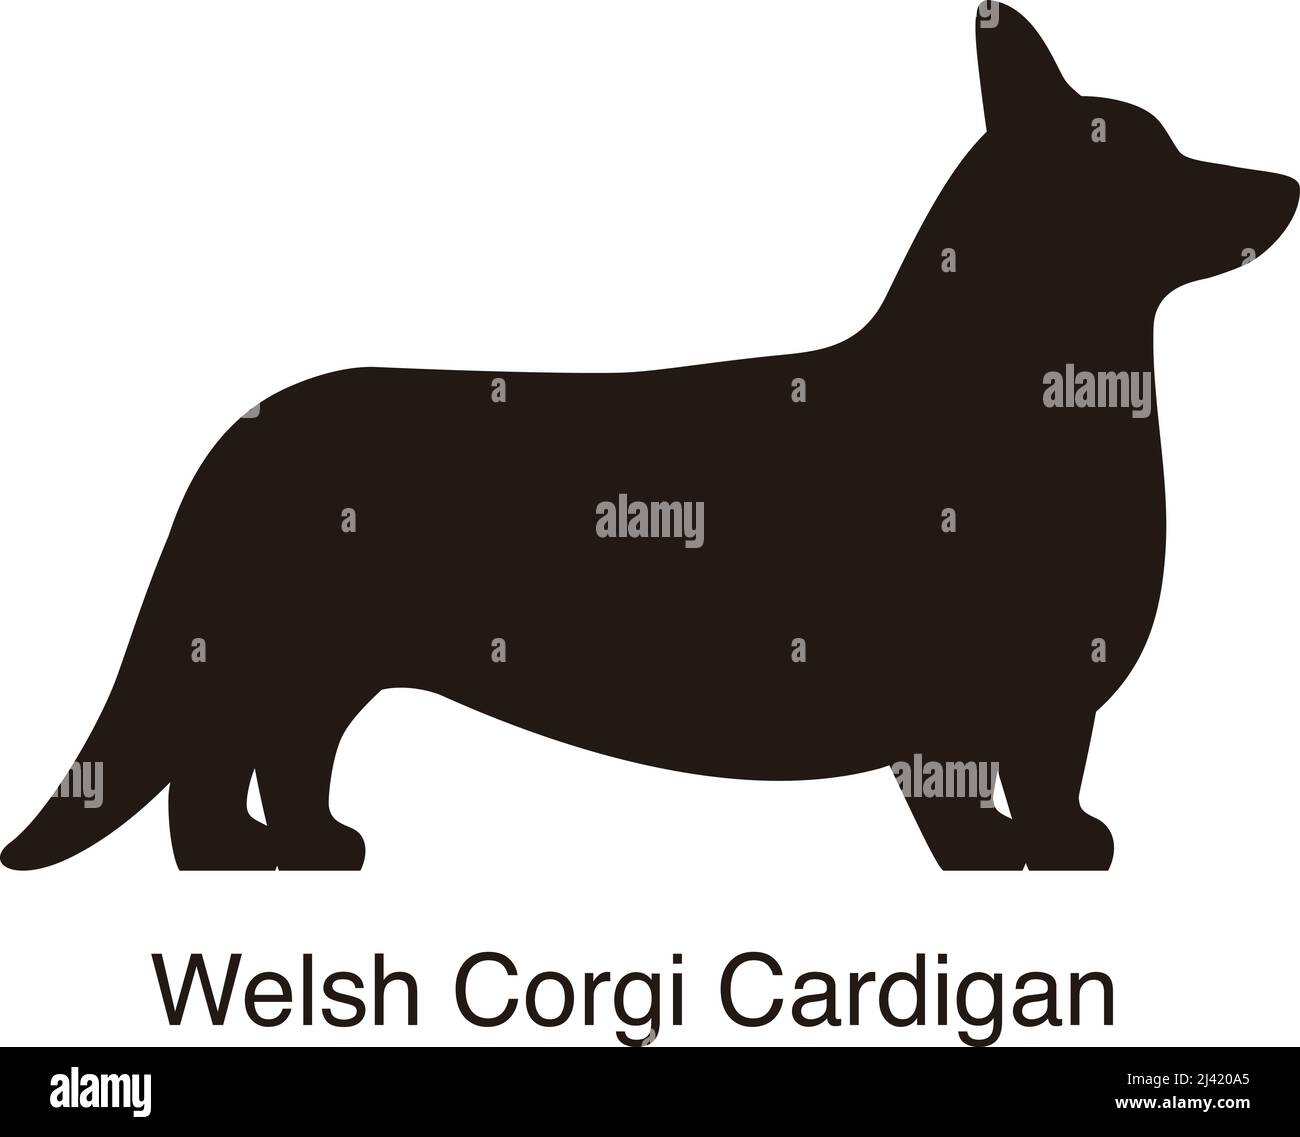 Welsh Corgi Cardigan dog silhouette, side view, vector illustration Stock Vector